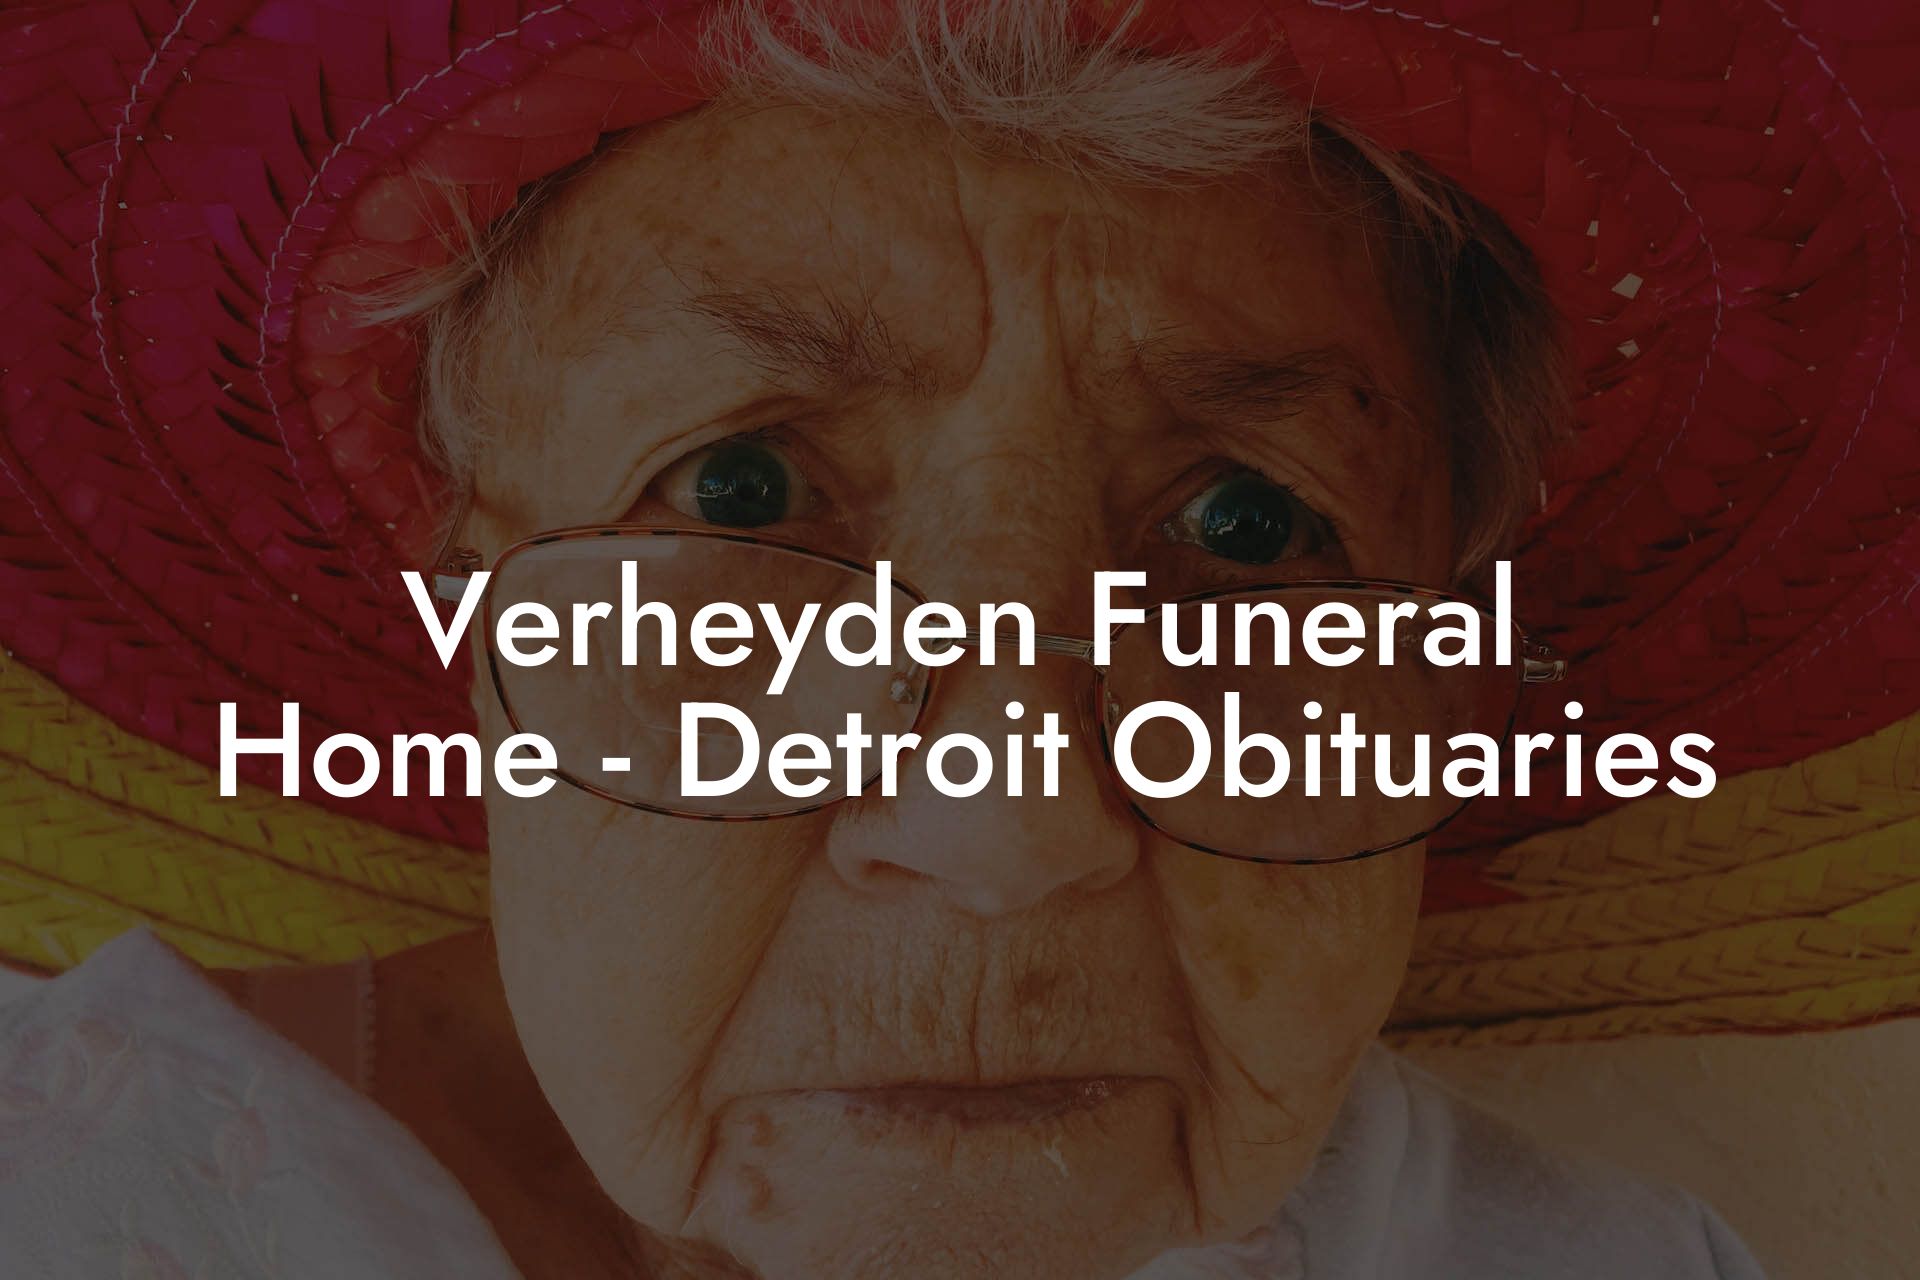 Verheyden Funeral Home - Detroit Obituaries